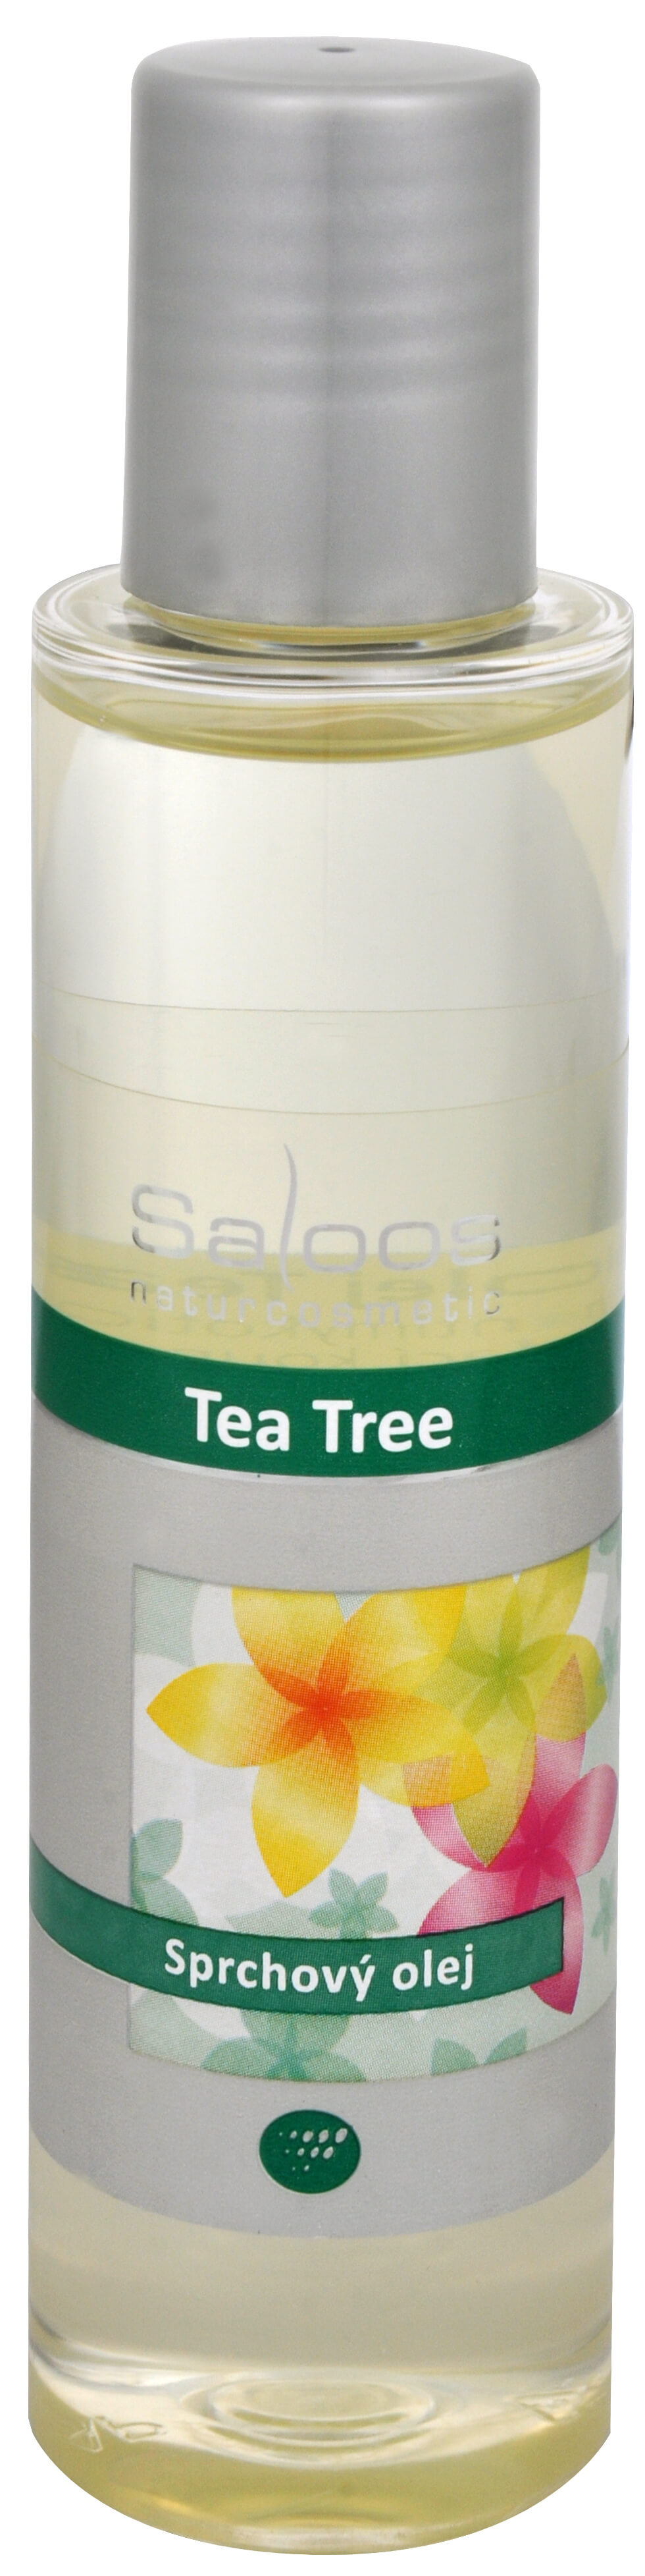 E-shop Saloos Sprchový olej - Tea Tree 125 ml